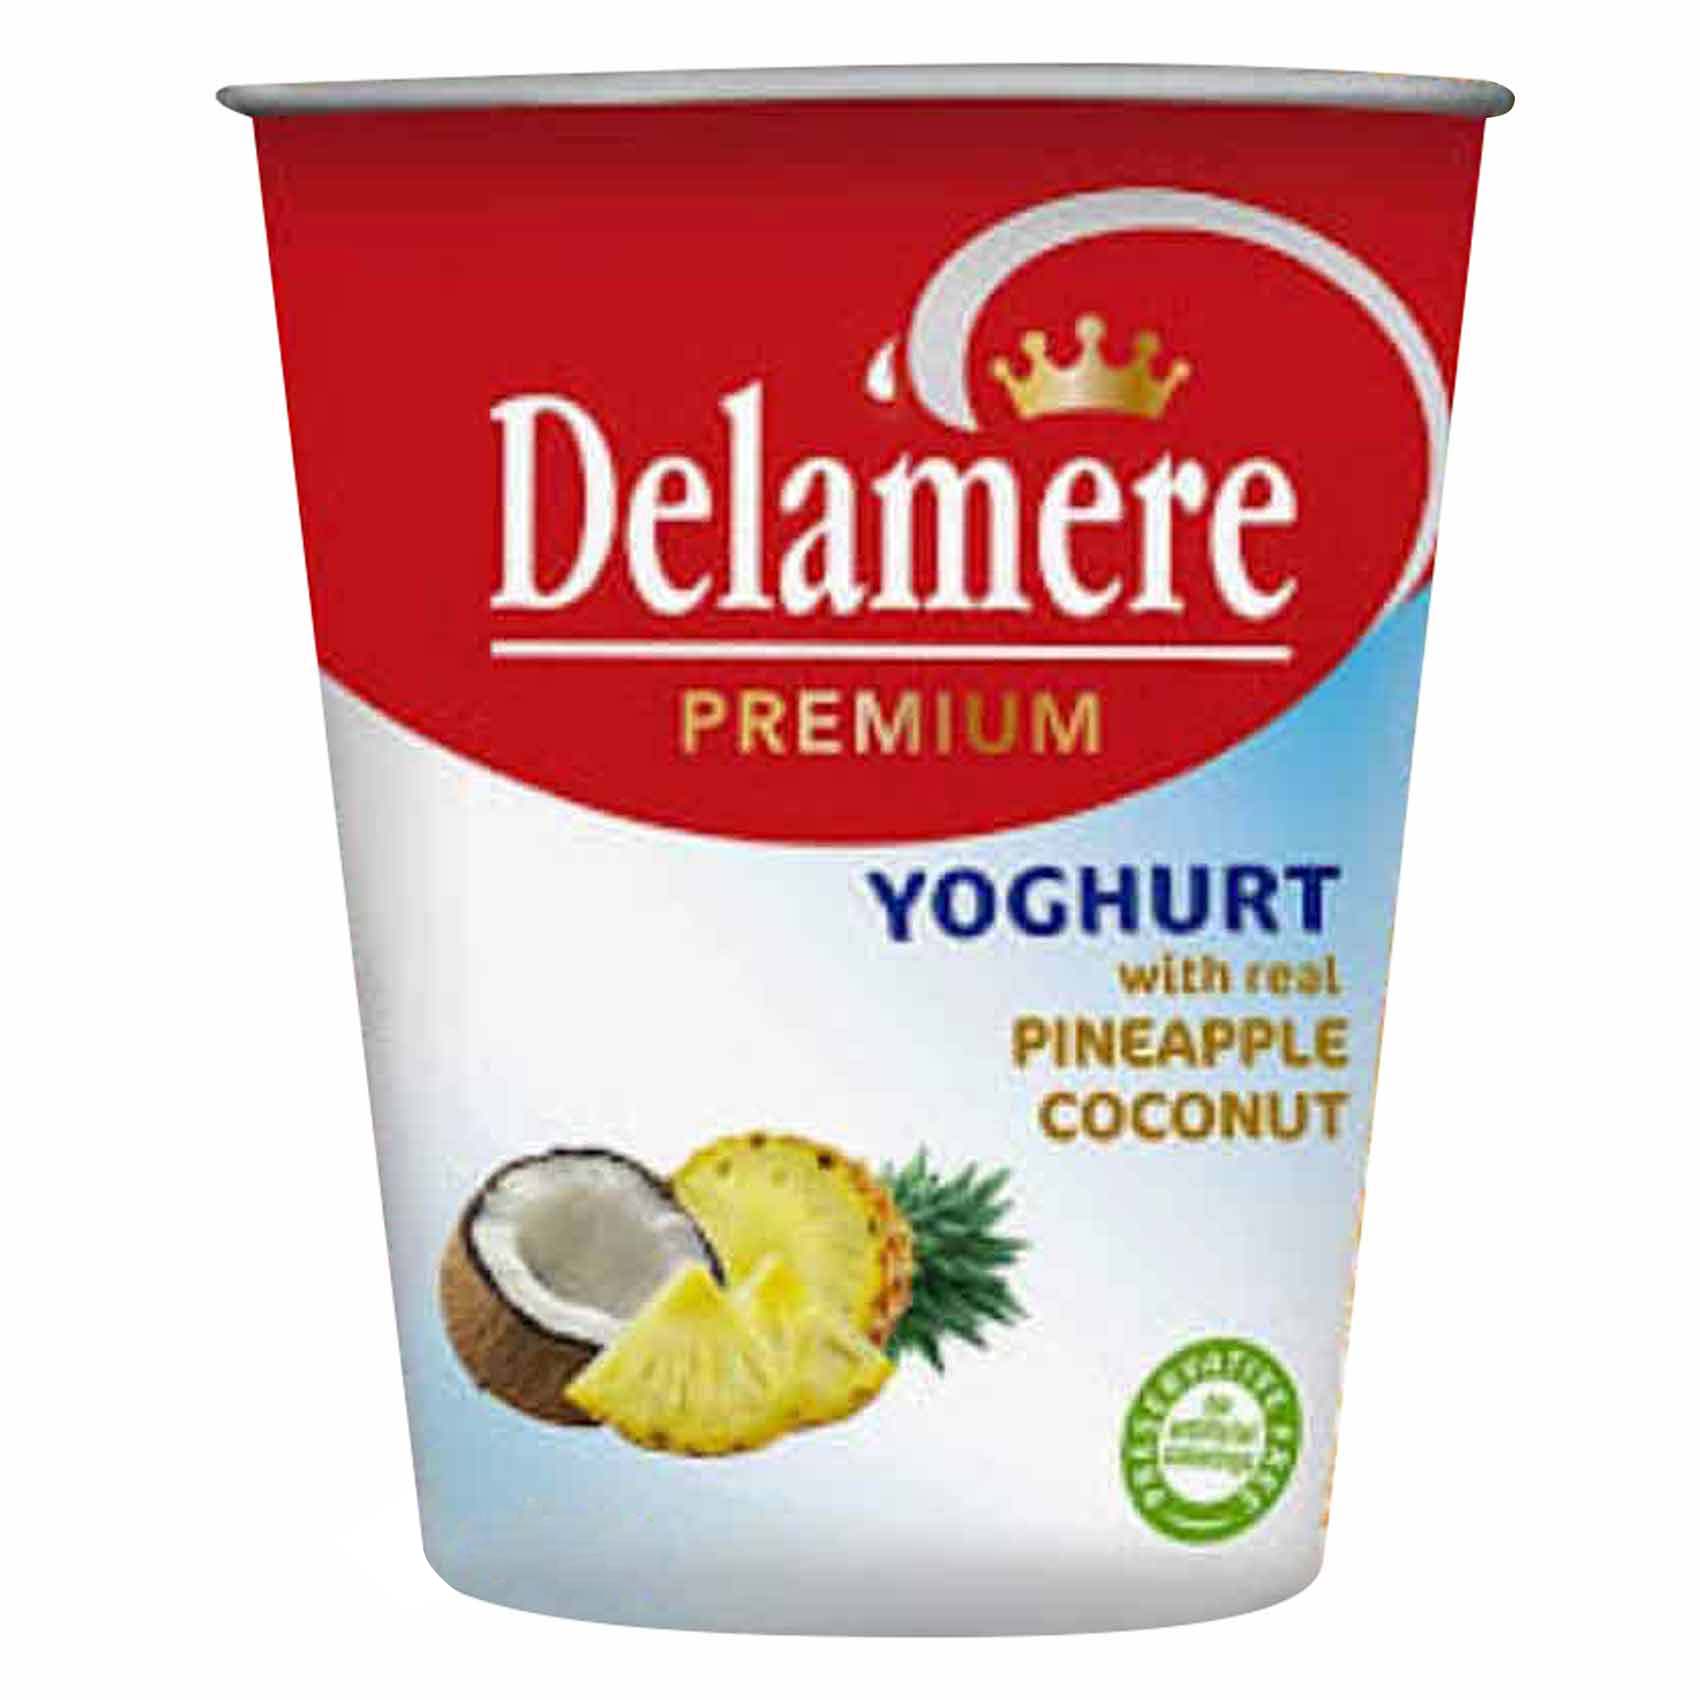 Delamere Premium Pineapple And Coconut Yoghurt 250g